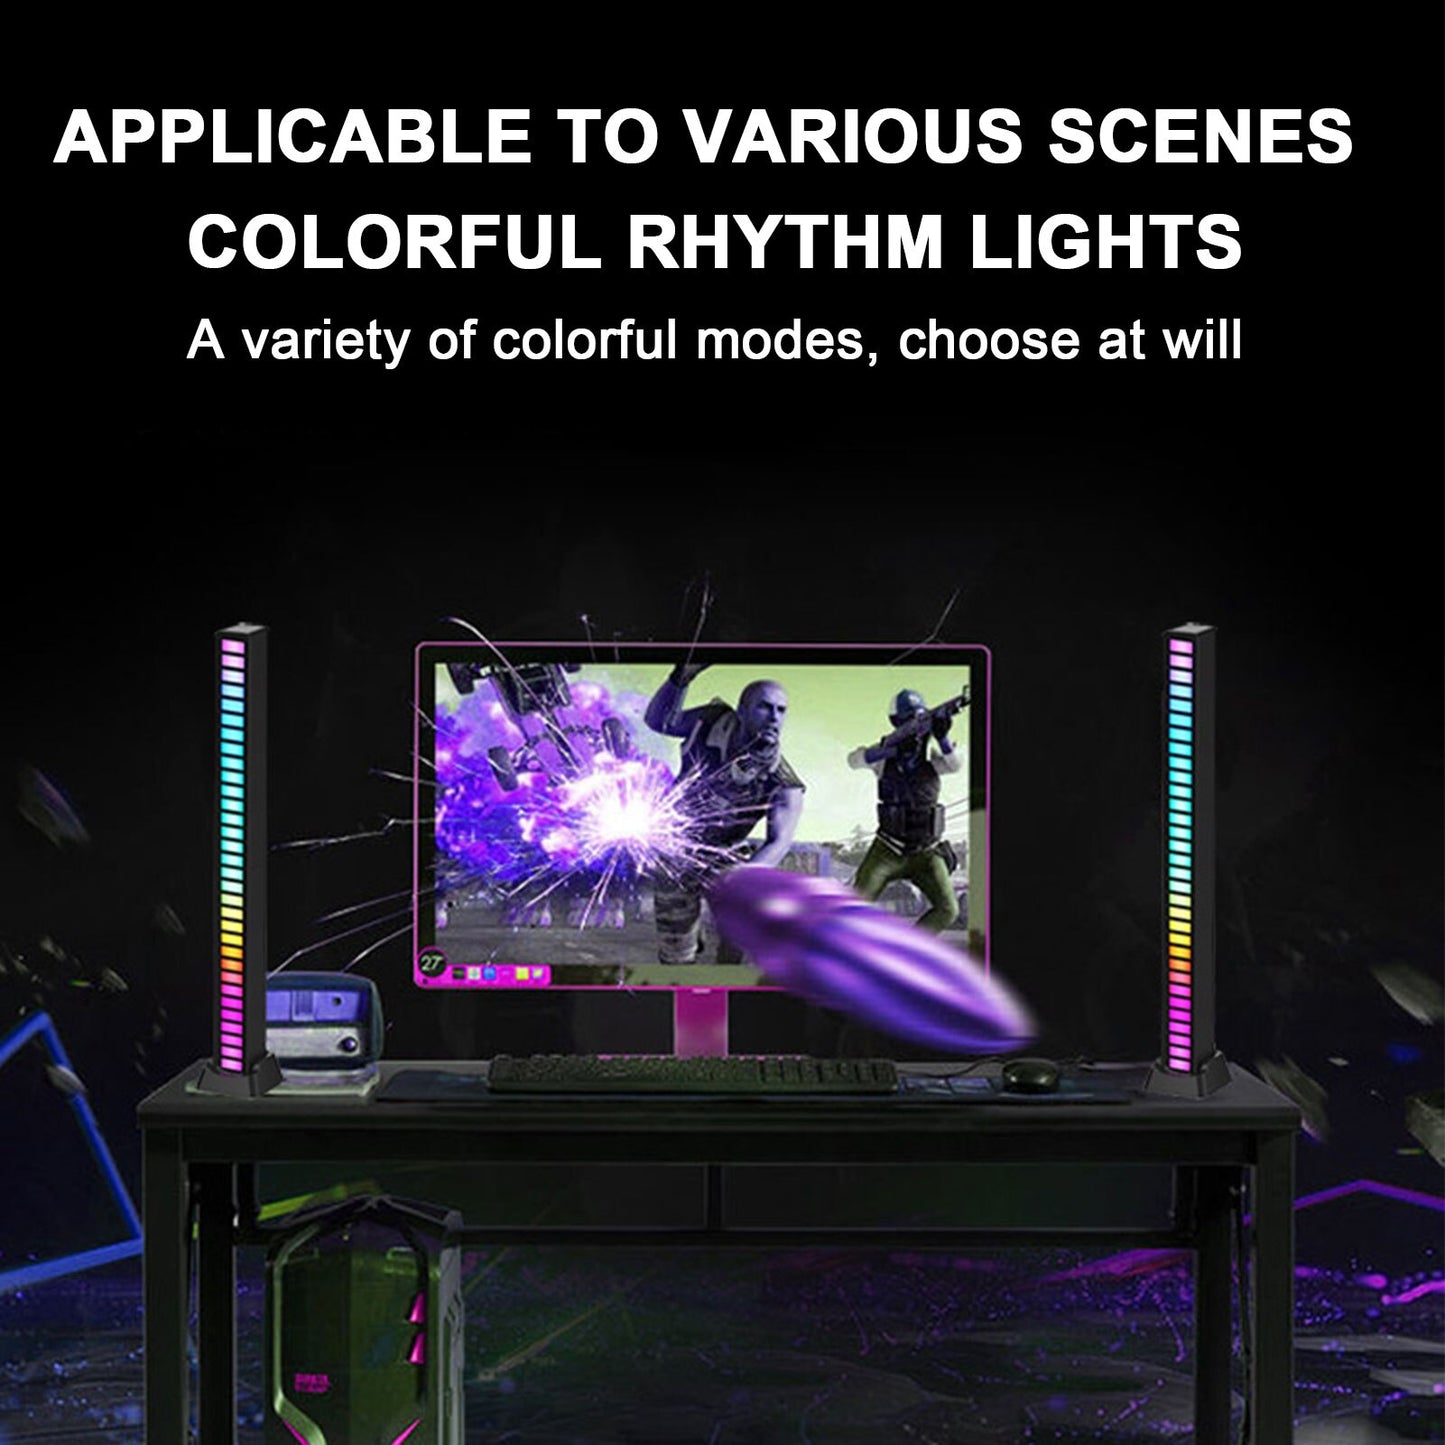 Qfdian RGB Voice-Activated Rhythm Light Sound Reactive Led Bar Rechargeable Colorful Office Rhythm Music LED Light Ambient Strip Decor